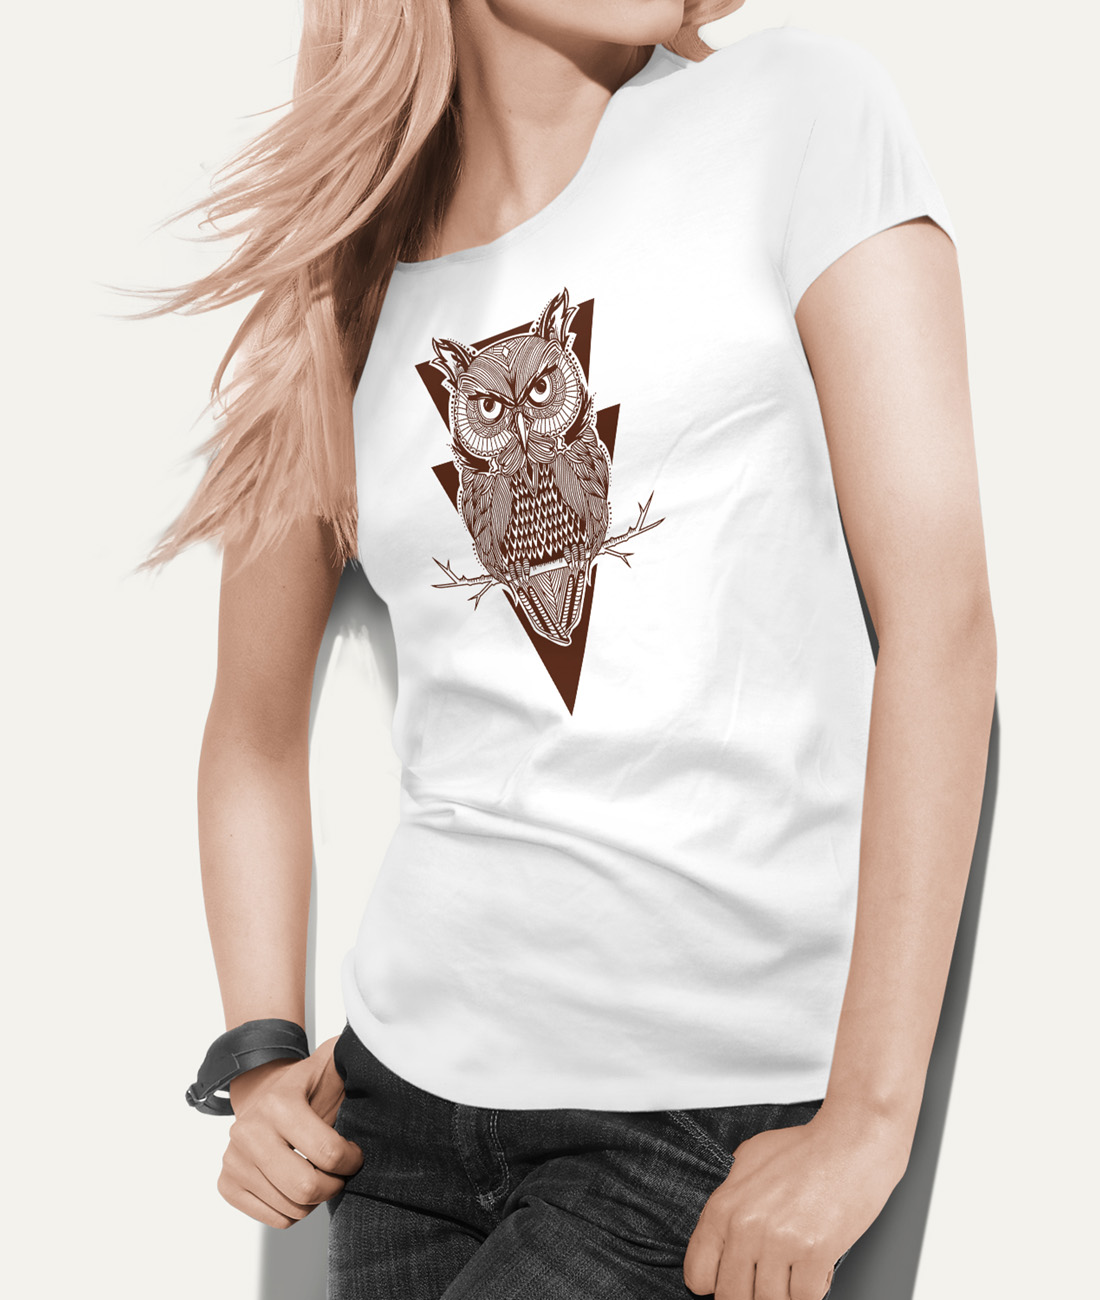 Tshirt owl design